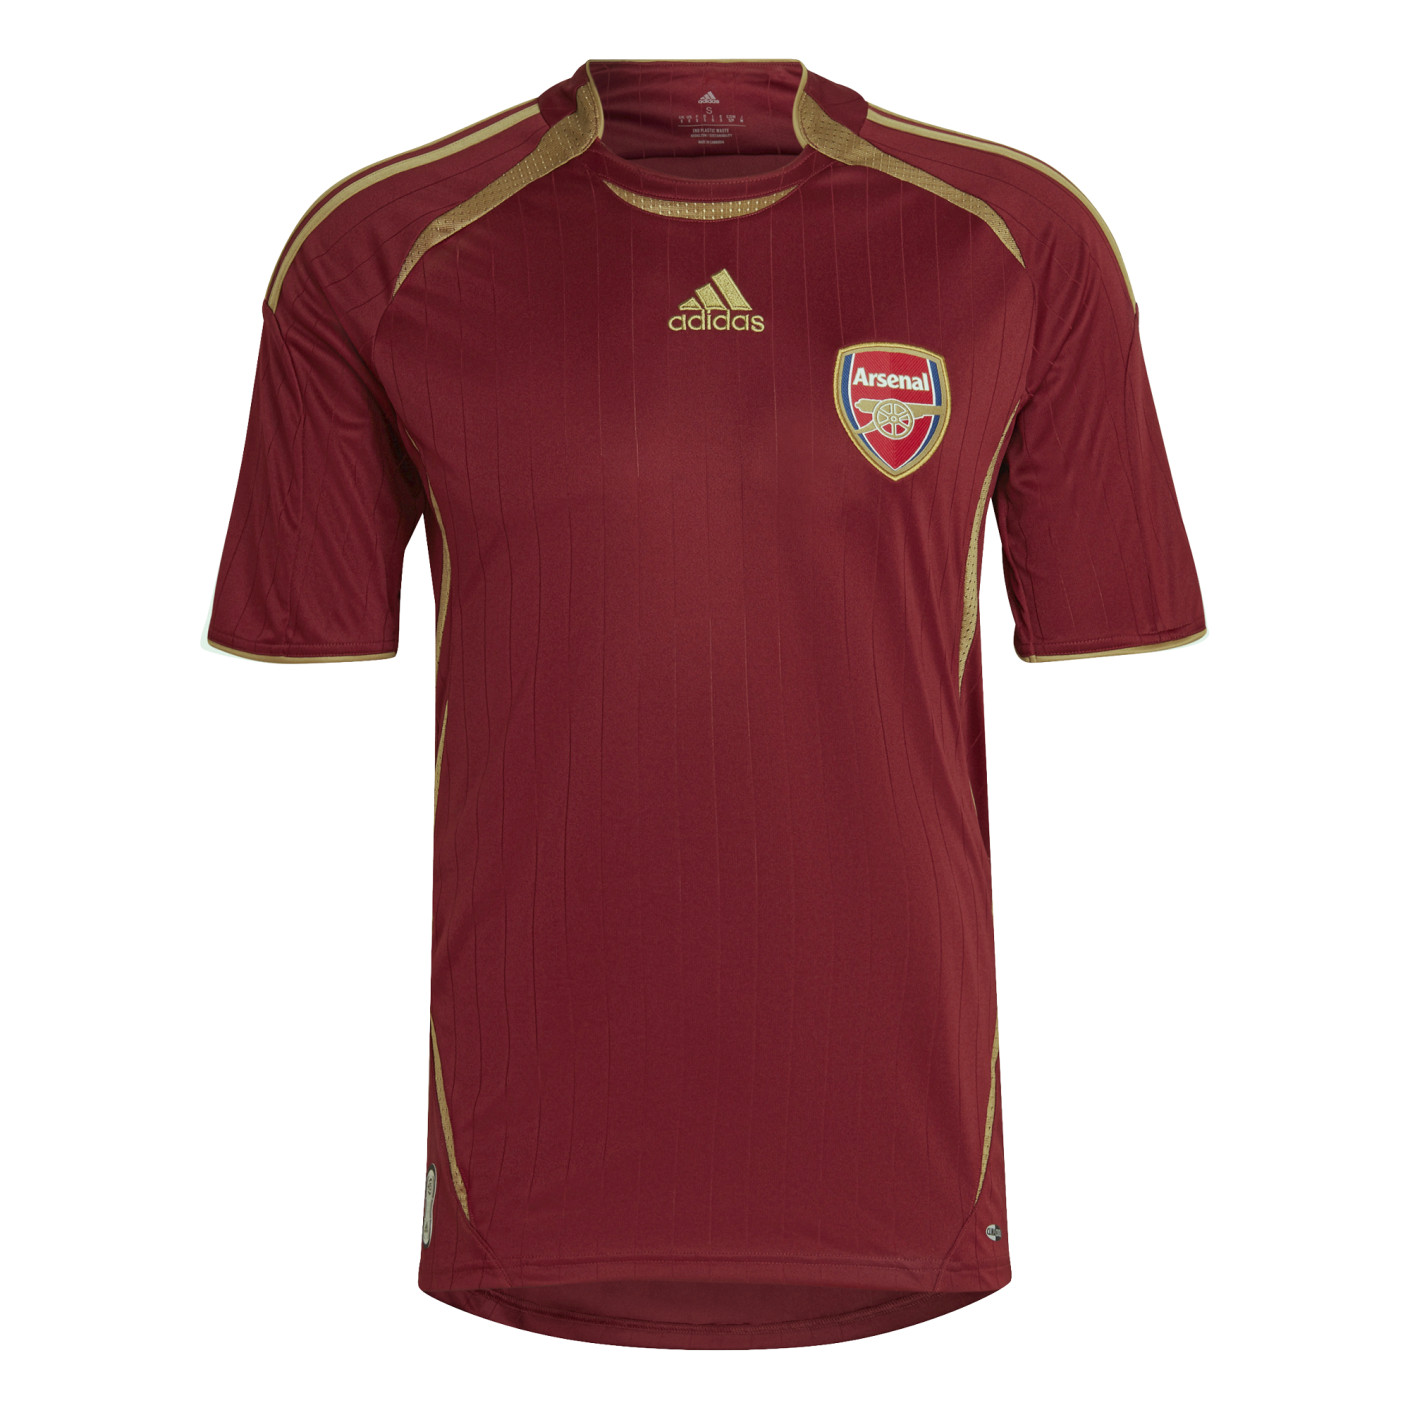 adidas Arsenal Voetbalshirt 2021-2022 Bordeauxrood